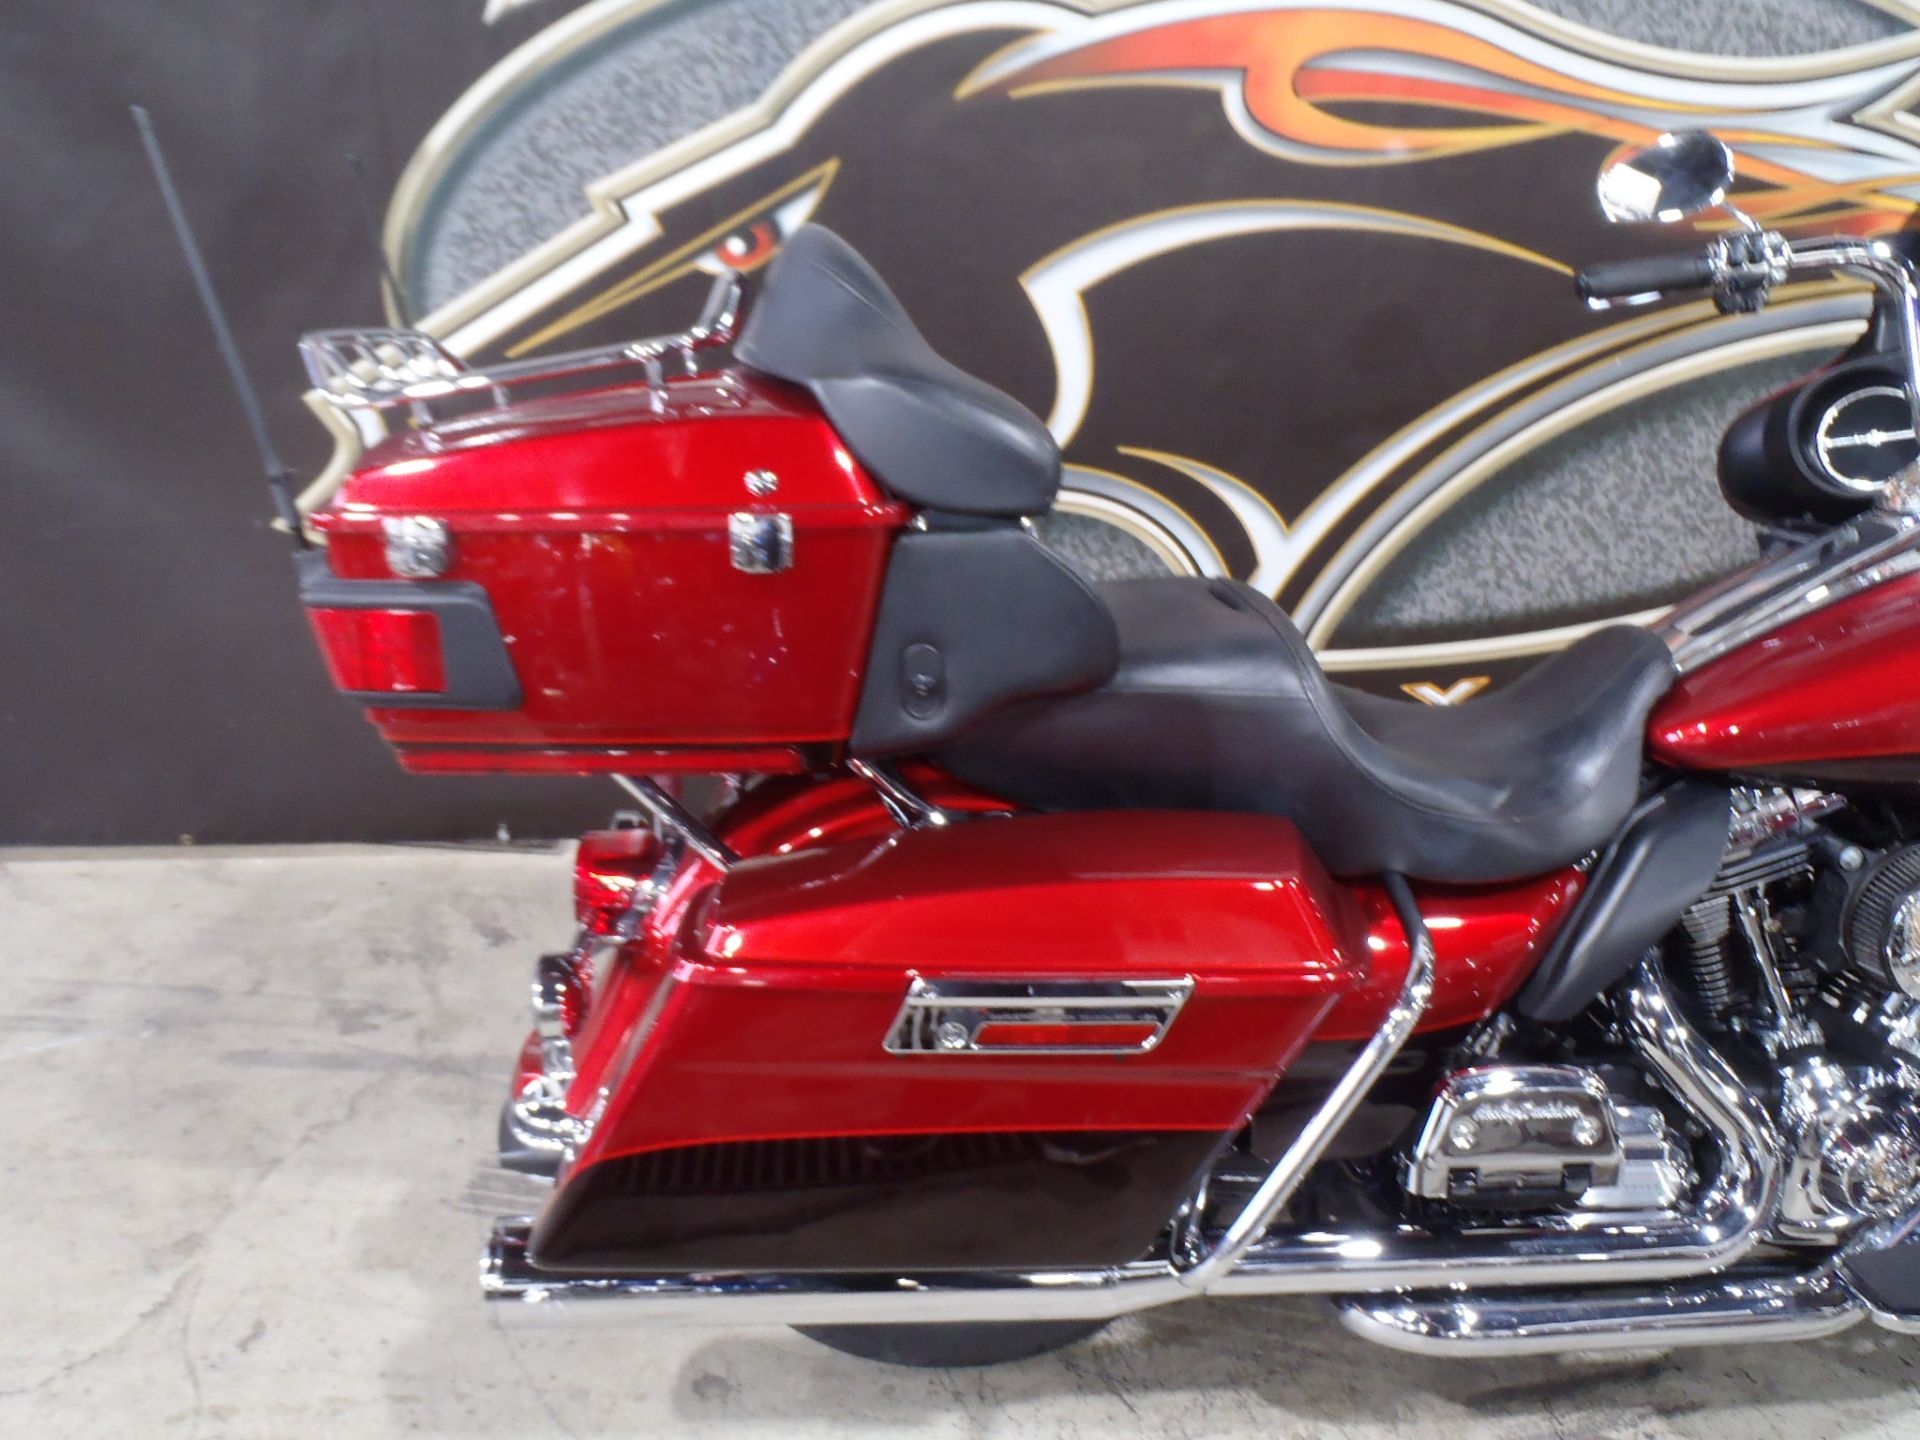 2012 Harley-Davidson Electra Glide® Ultra Limited in South Saint Paul, Minnesota - Photo 8